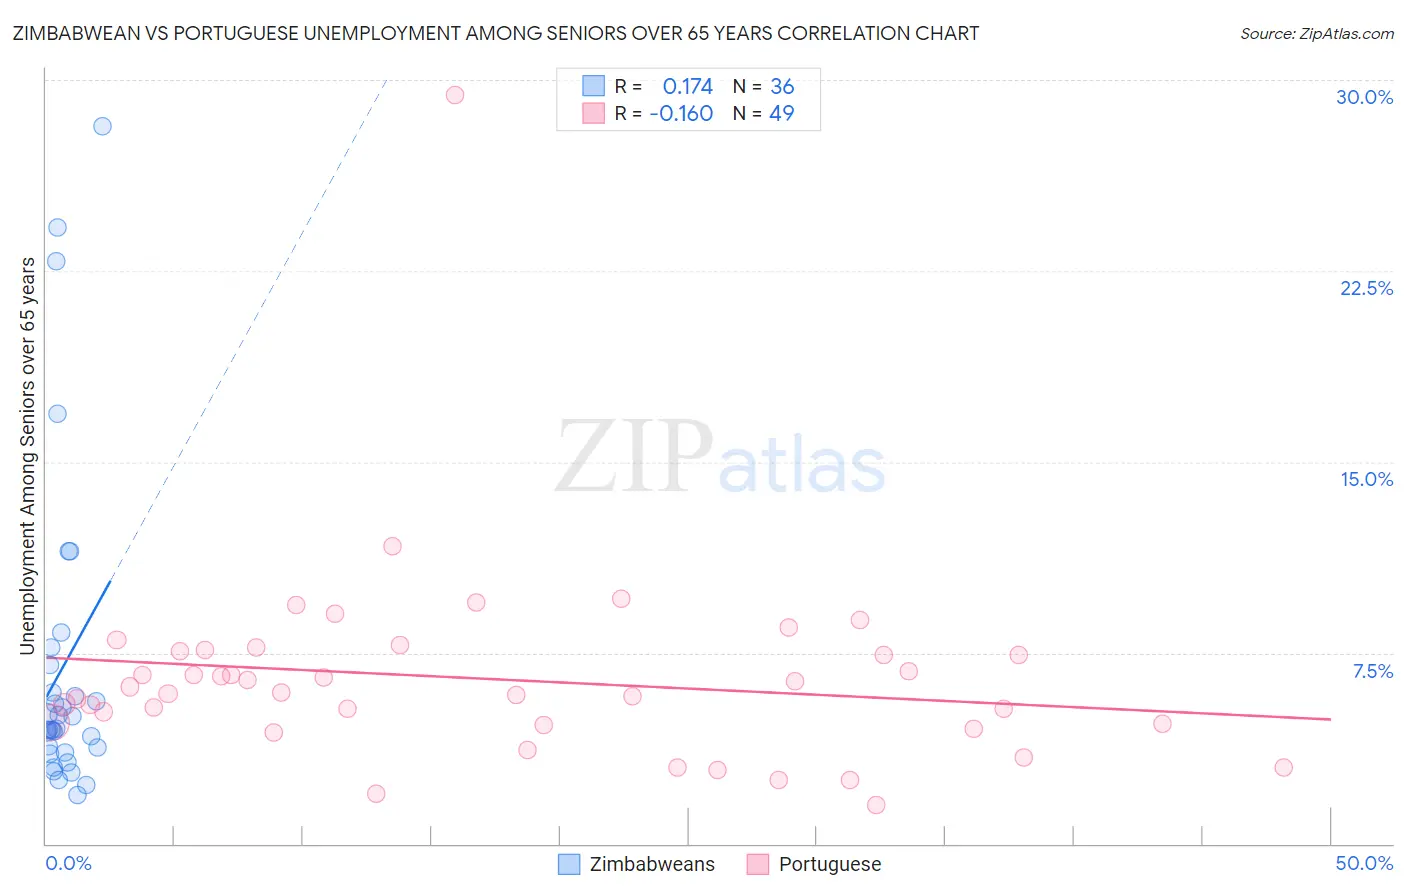 Zimbabwean vs Portuguese Unemployment Among Seniors over 65 years